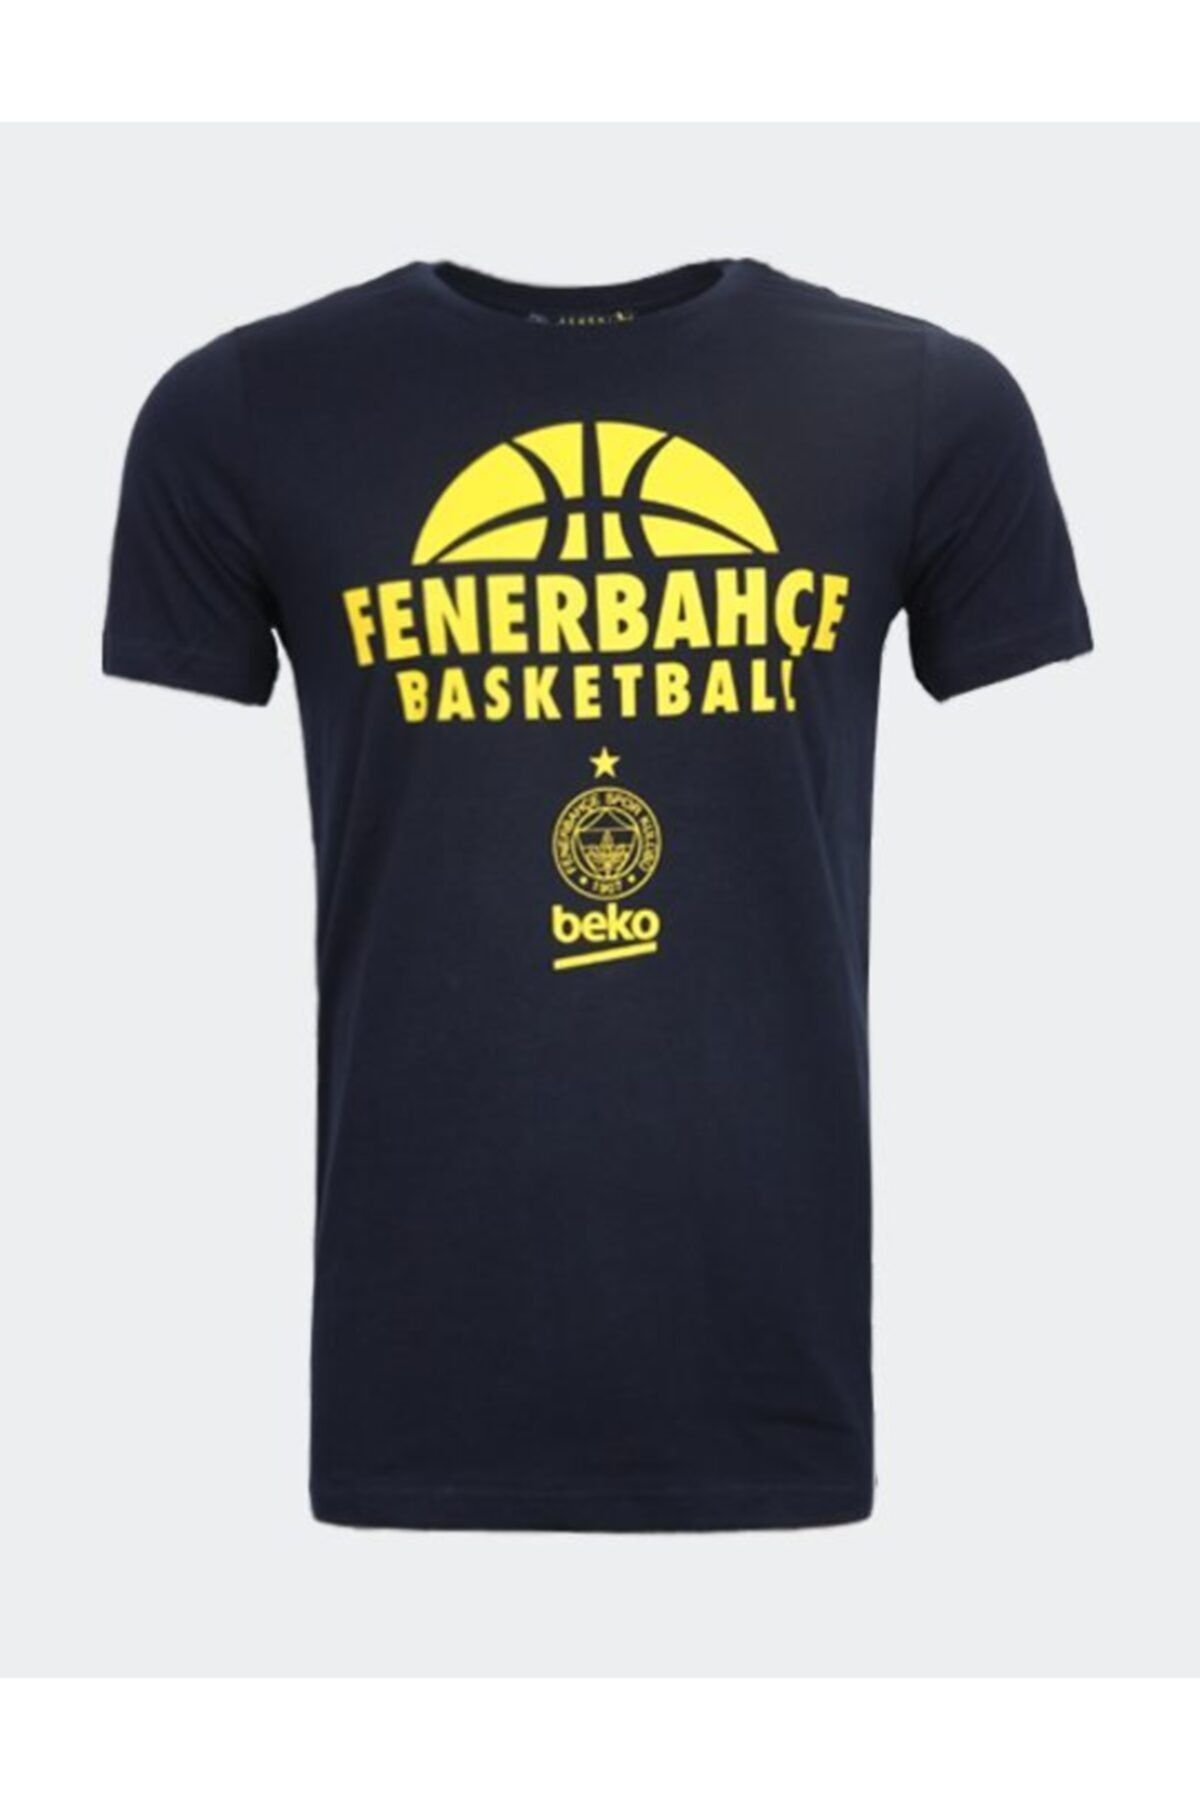 Fenerbahçe Basket Fenerbahçe Basketbol Tshırt 20